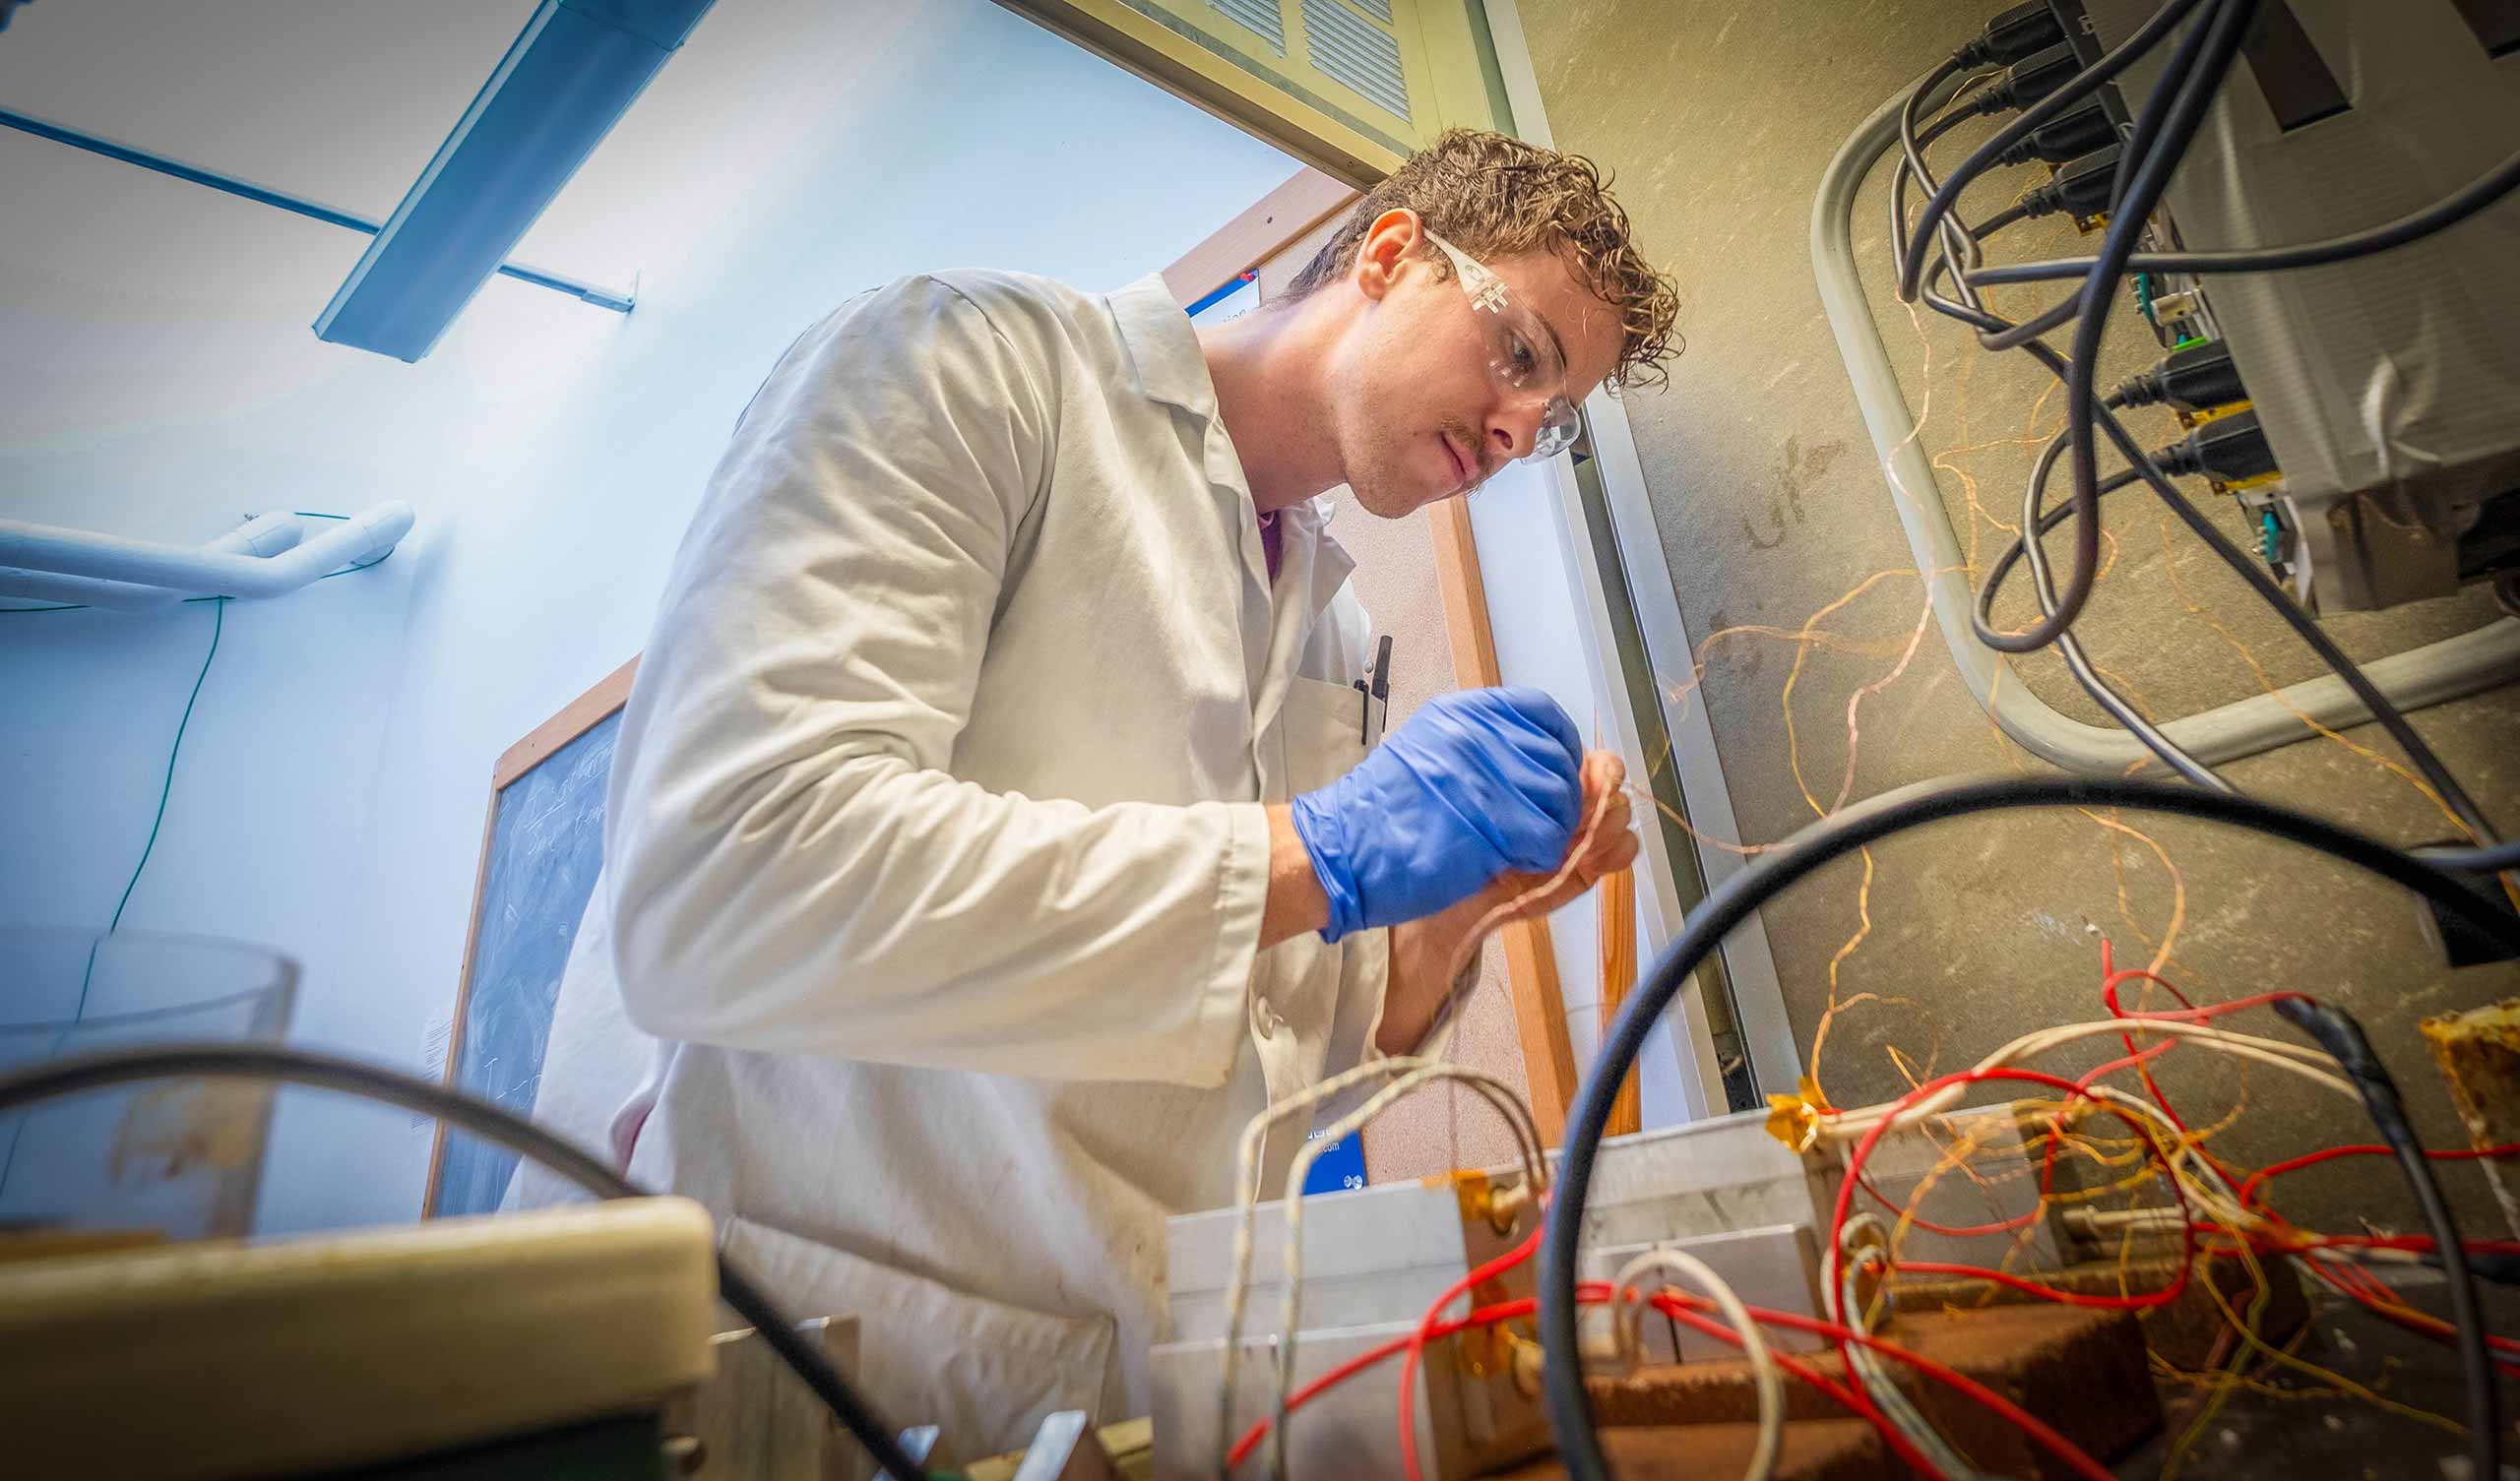 Tom Esdale works in the Spratt Biochemistry lab, Sackler Science Building